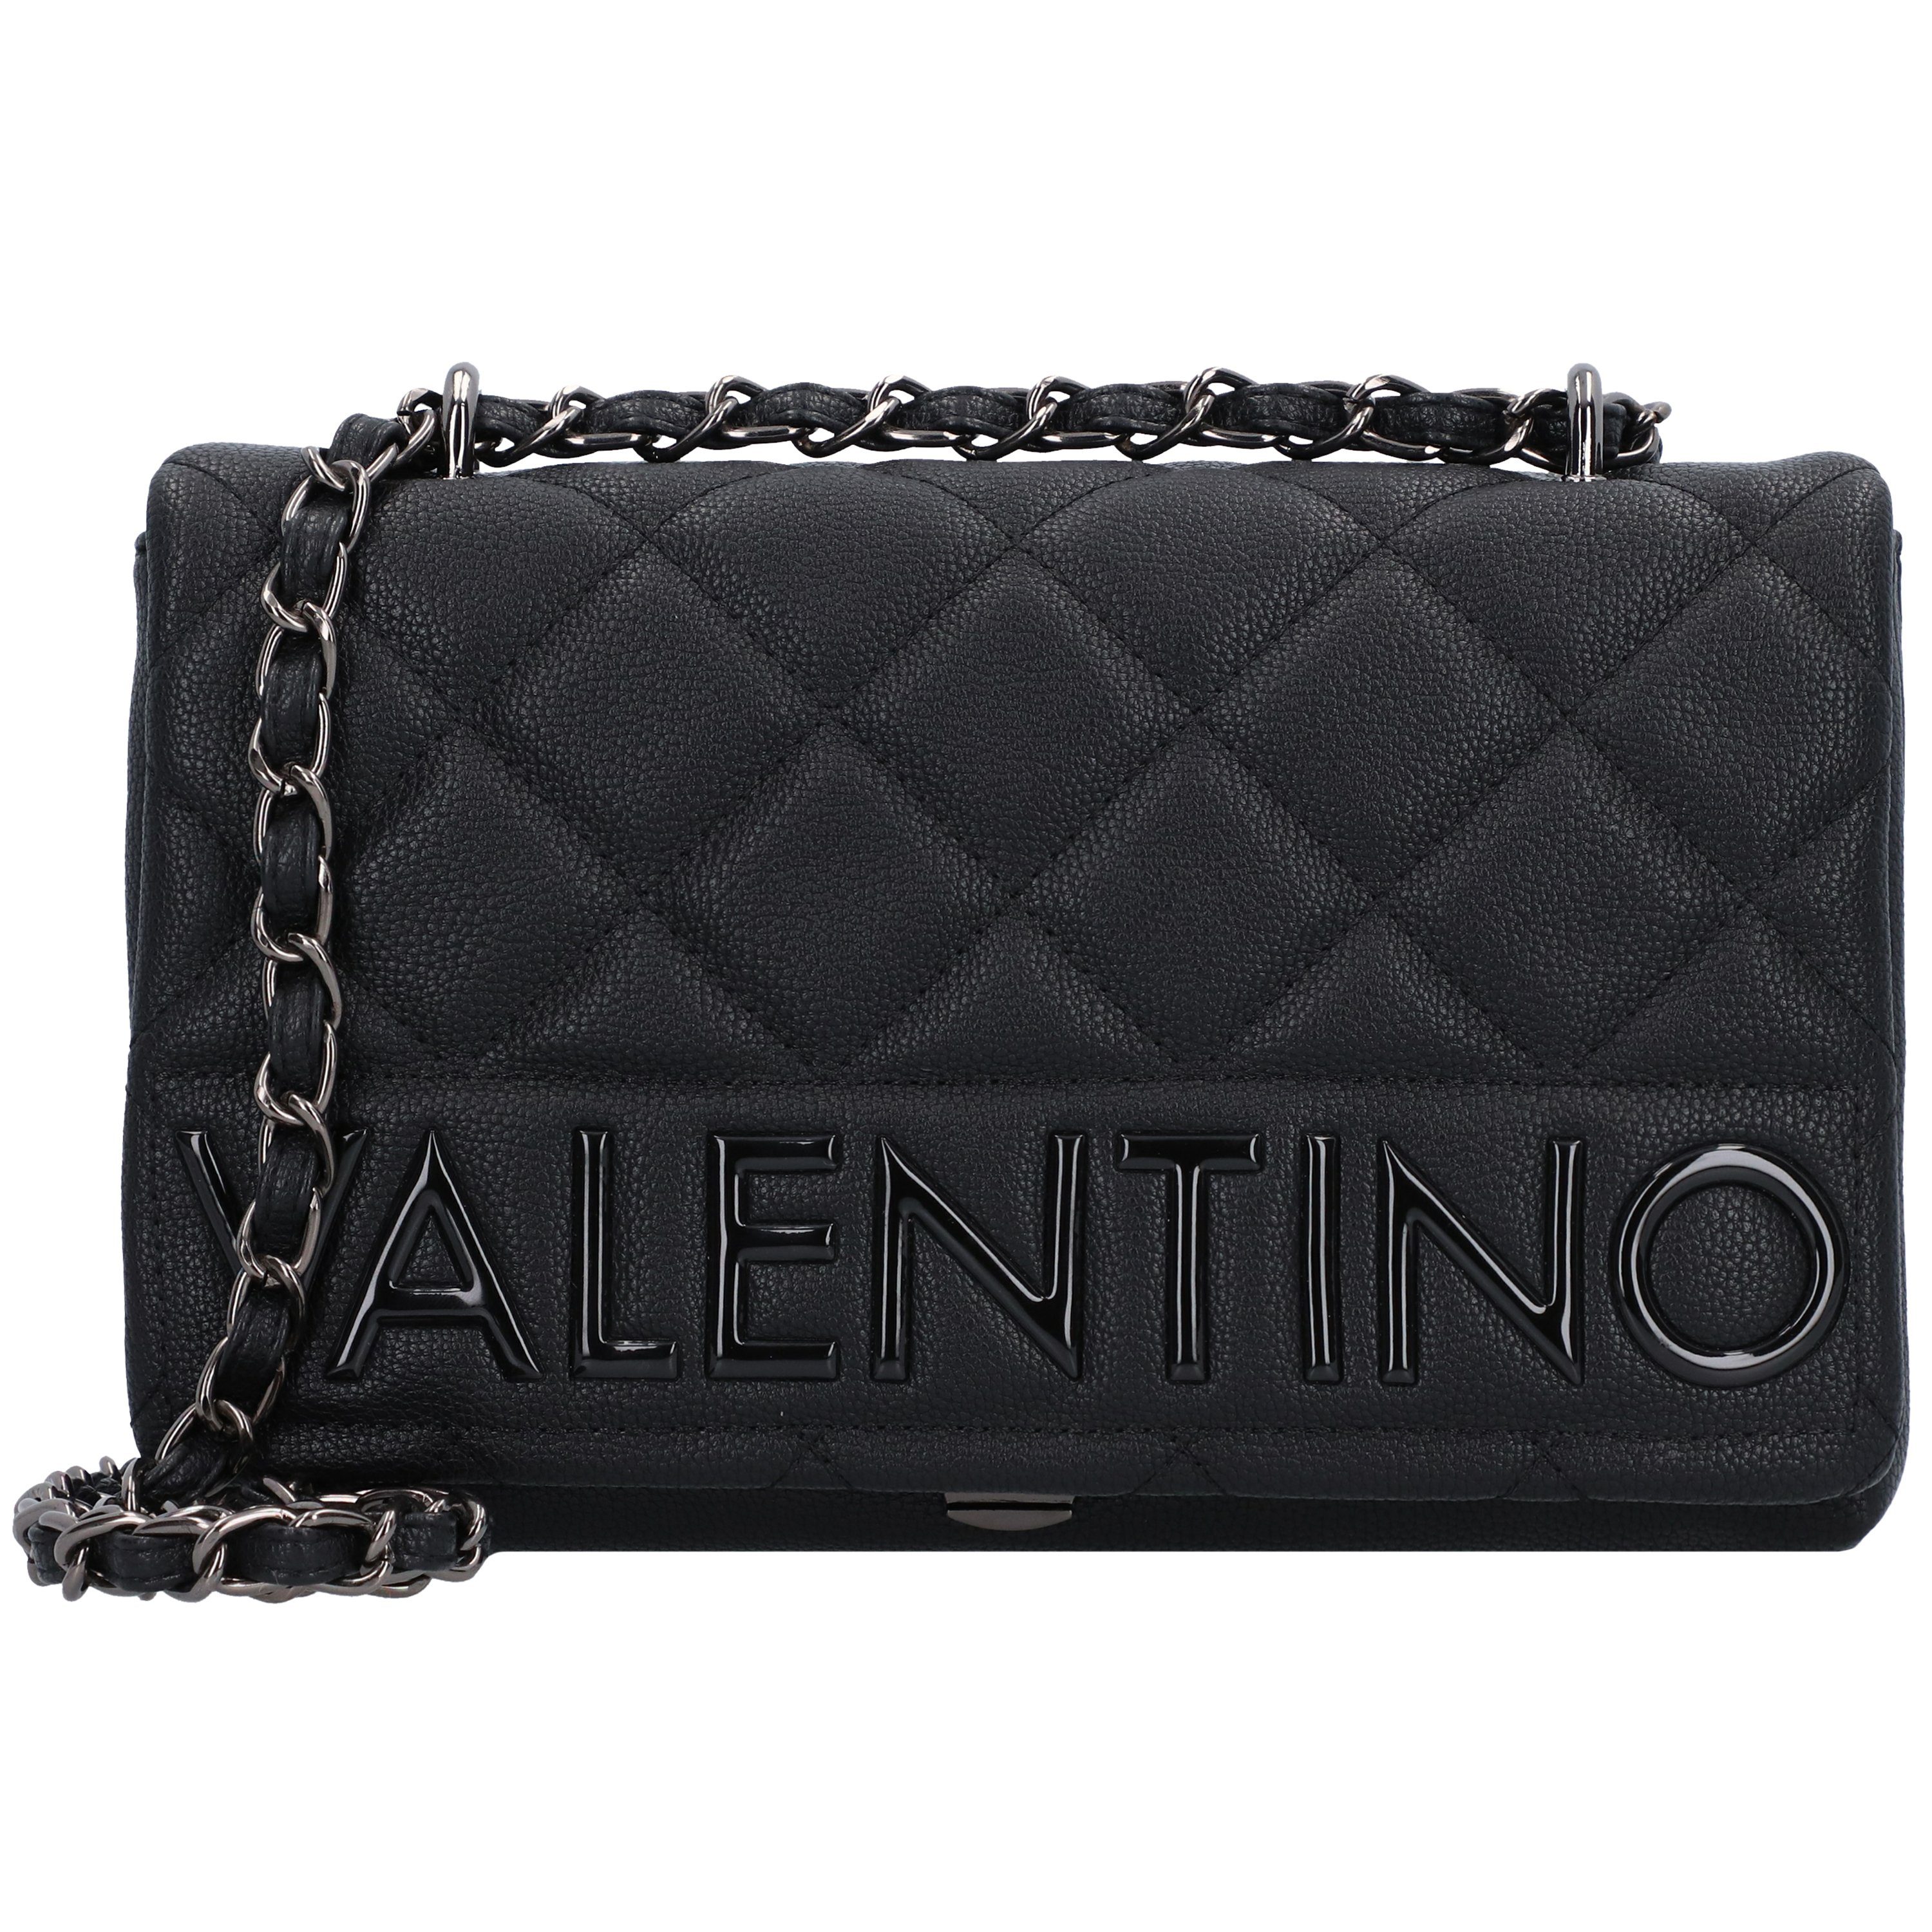 VALENTINO BAGS Schultertasche »Licia« online kaufen | OTTO